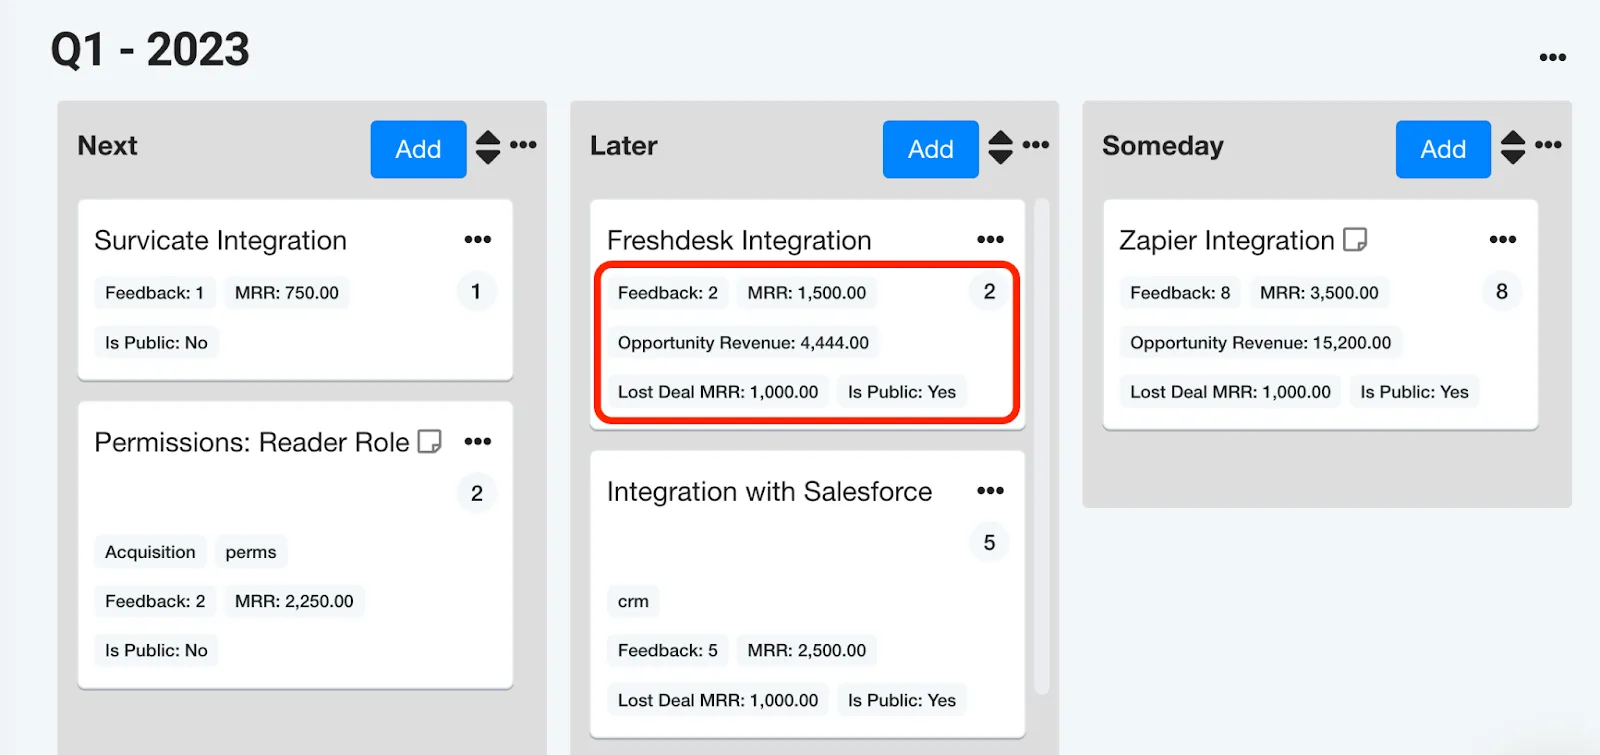 screenshot of a Savio product roadmap that displays customer feedback data